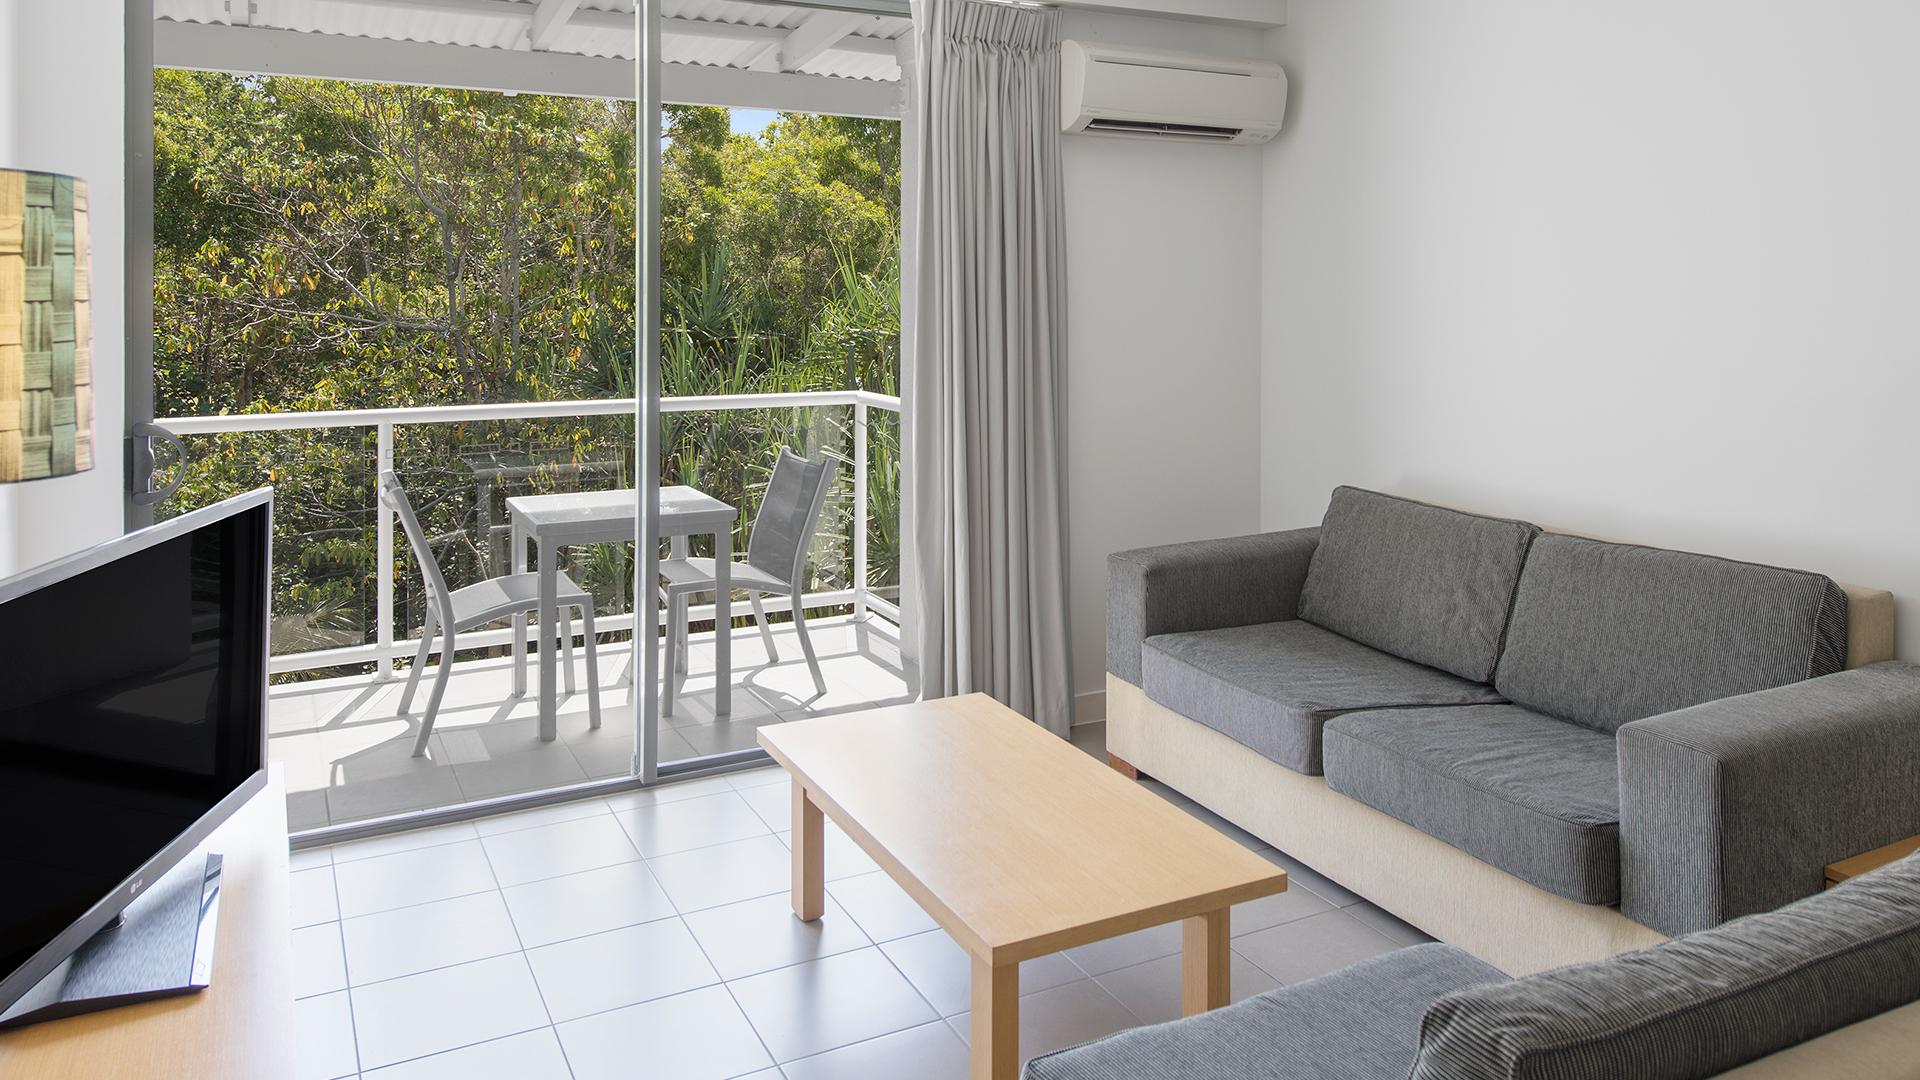 Two-Bedroom Garden-View Apartment image 1 at Oaks Port Douglas Resort by Douglas Shire, Queensland, Australia